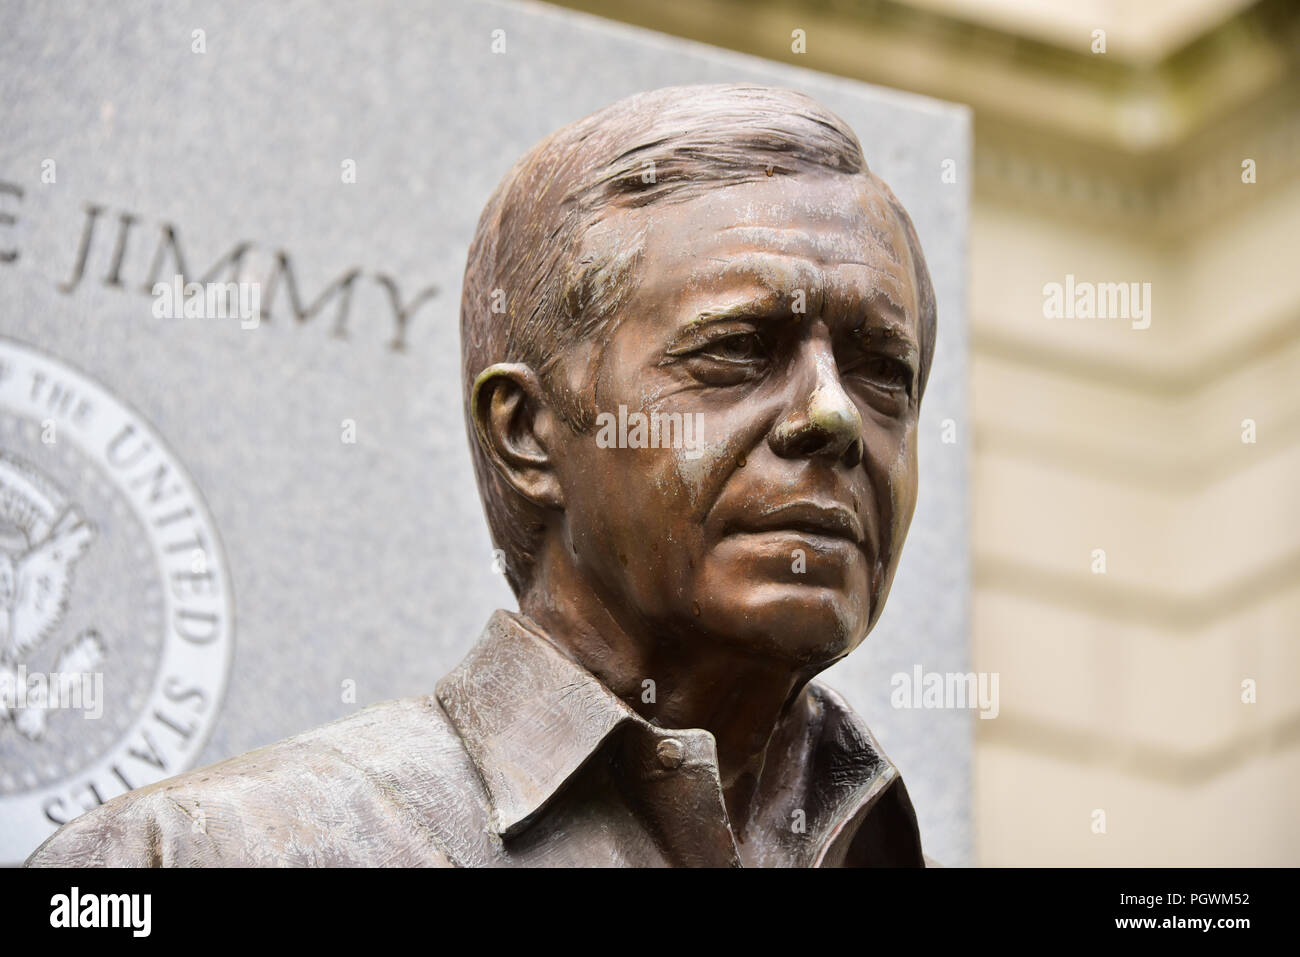 Statue Jimmy Carter, 39th President of the USA, 1977-1981, Atlanta, Georgia, USA Stock Photo